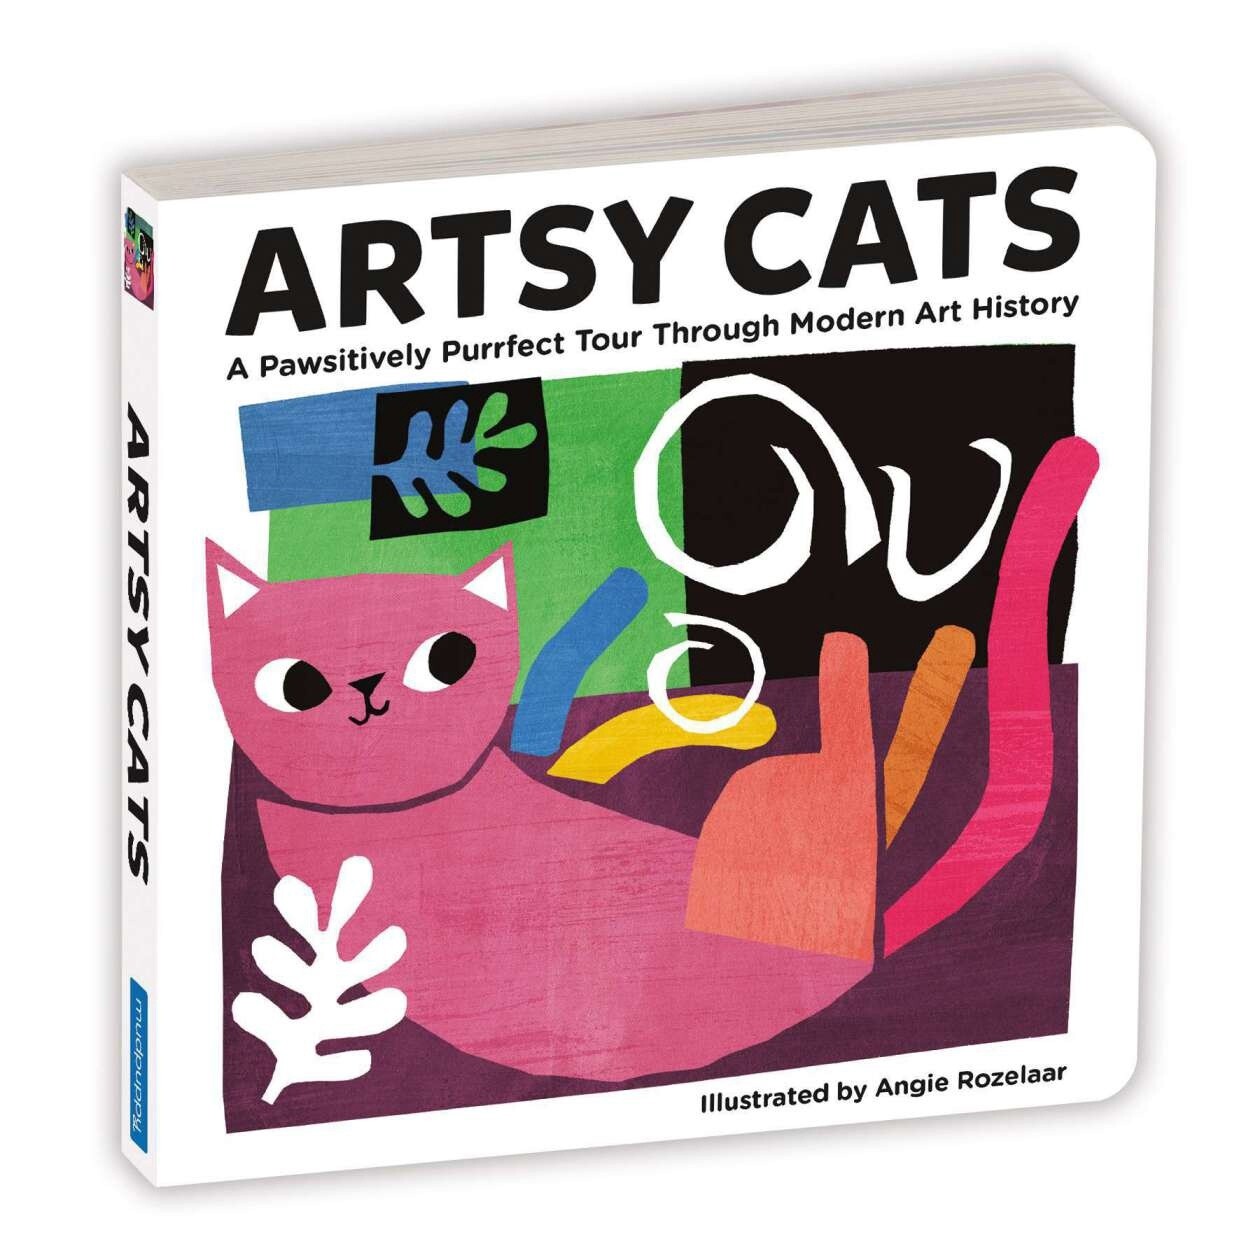 Mudpuppy Artsy Cats Board Book